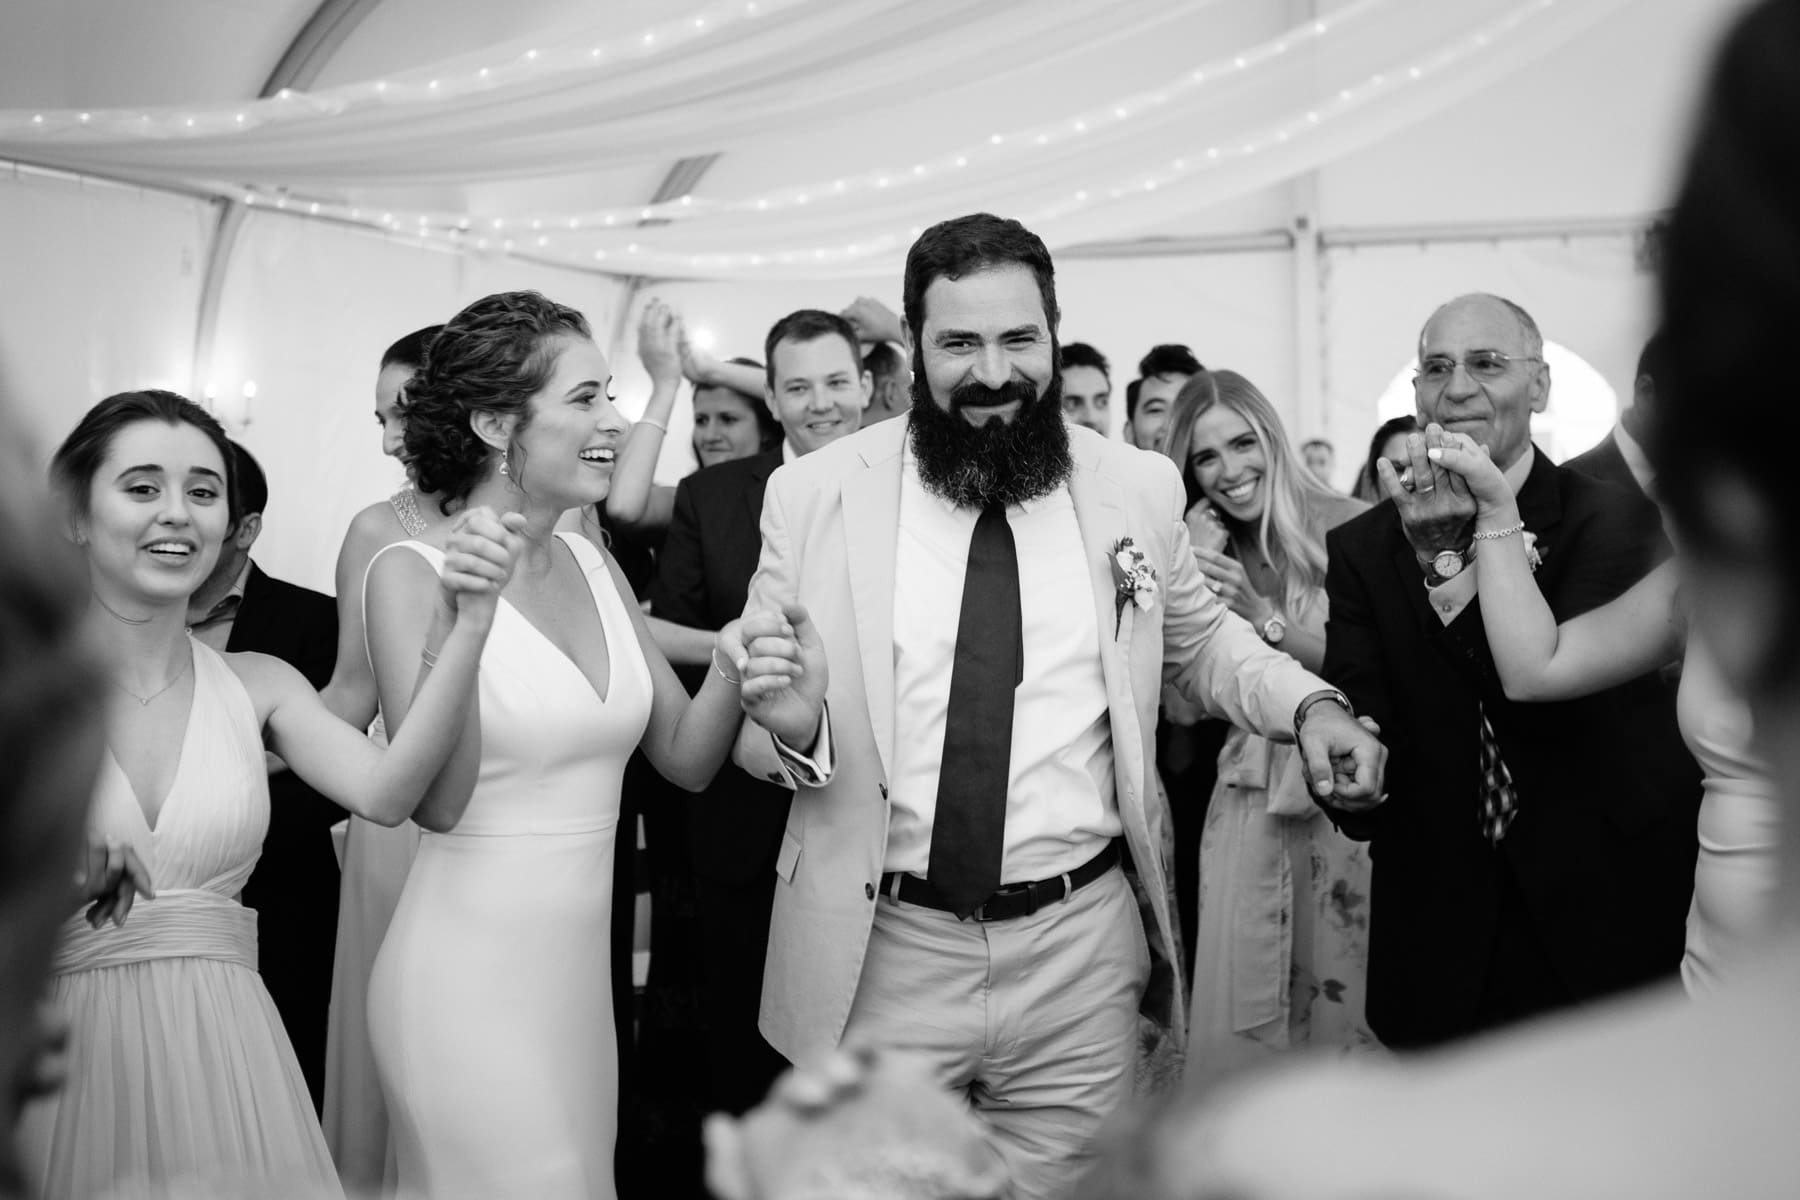 Misselwood wedding dancing | Kelly Benvenuto Photography | Boston wedding photographer